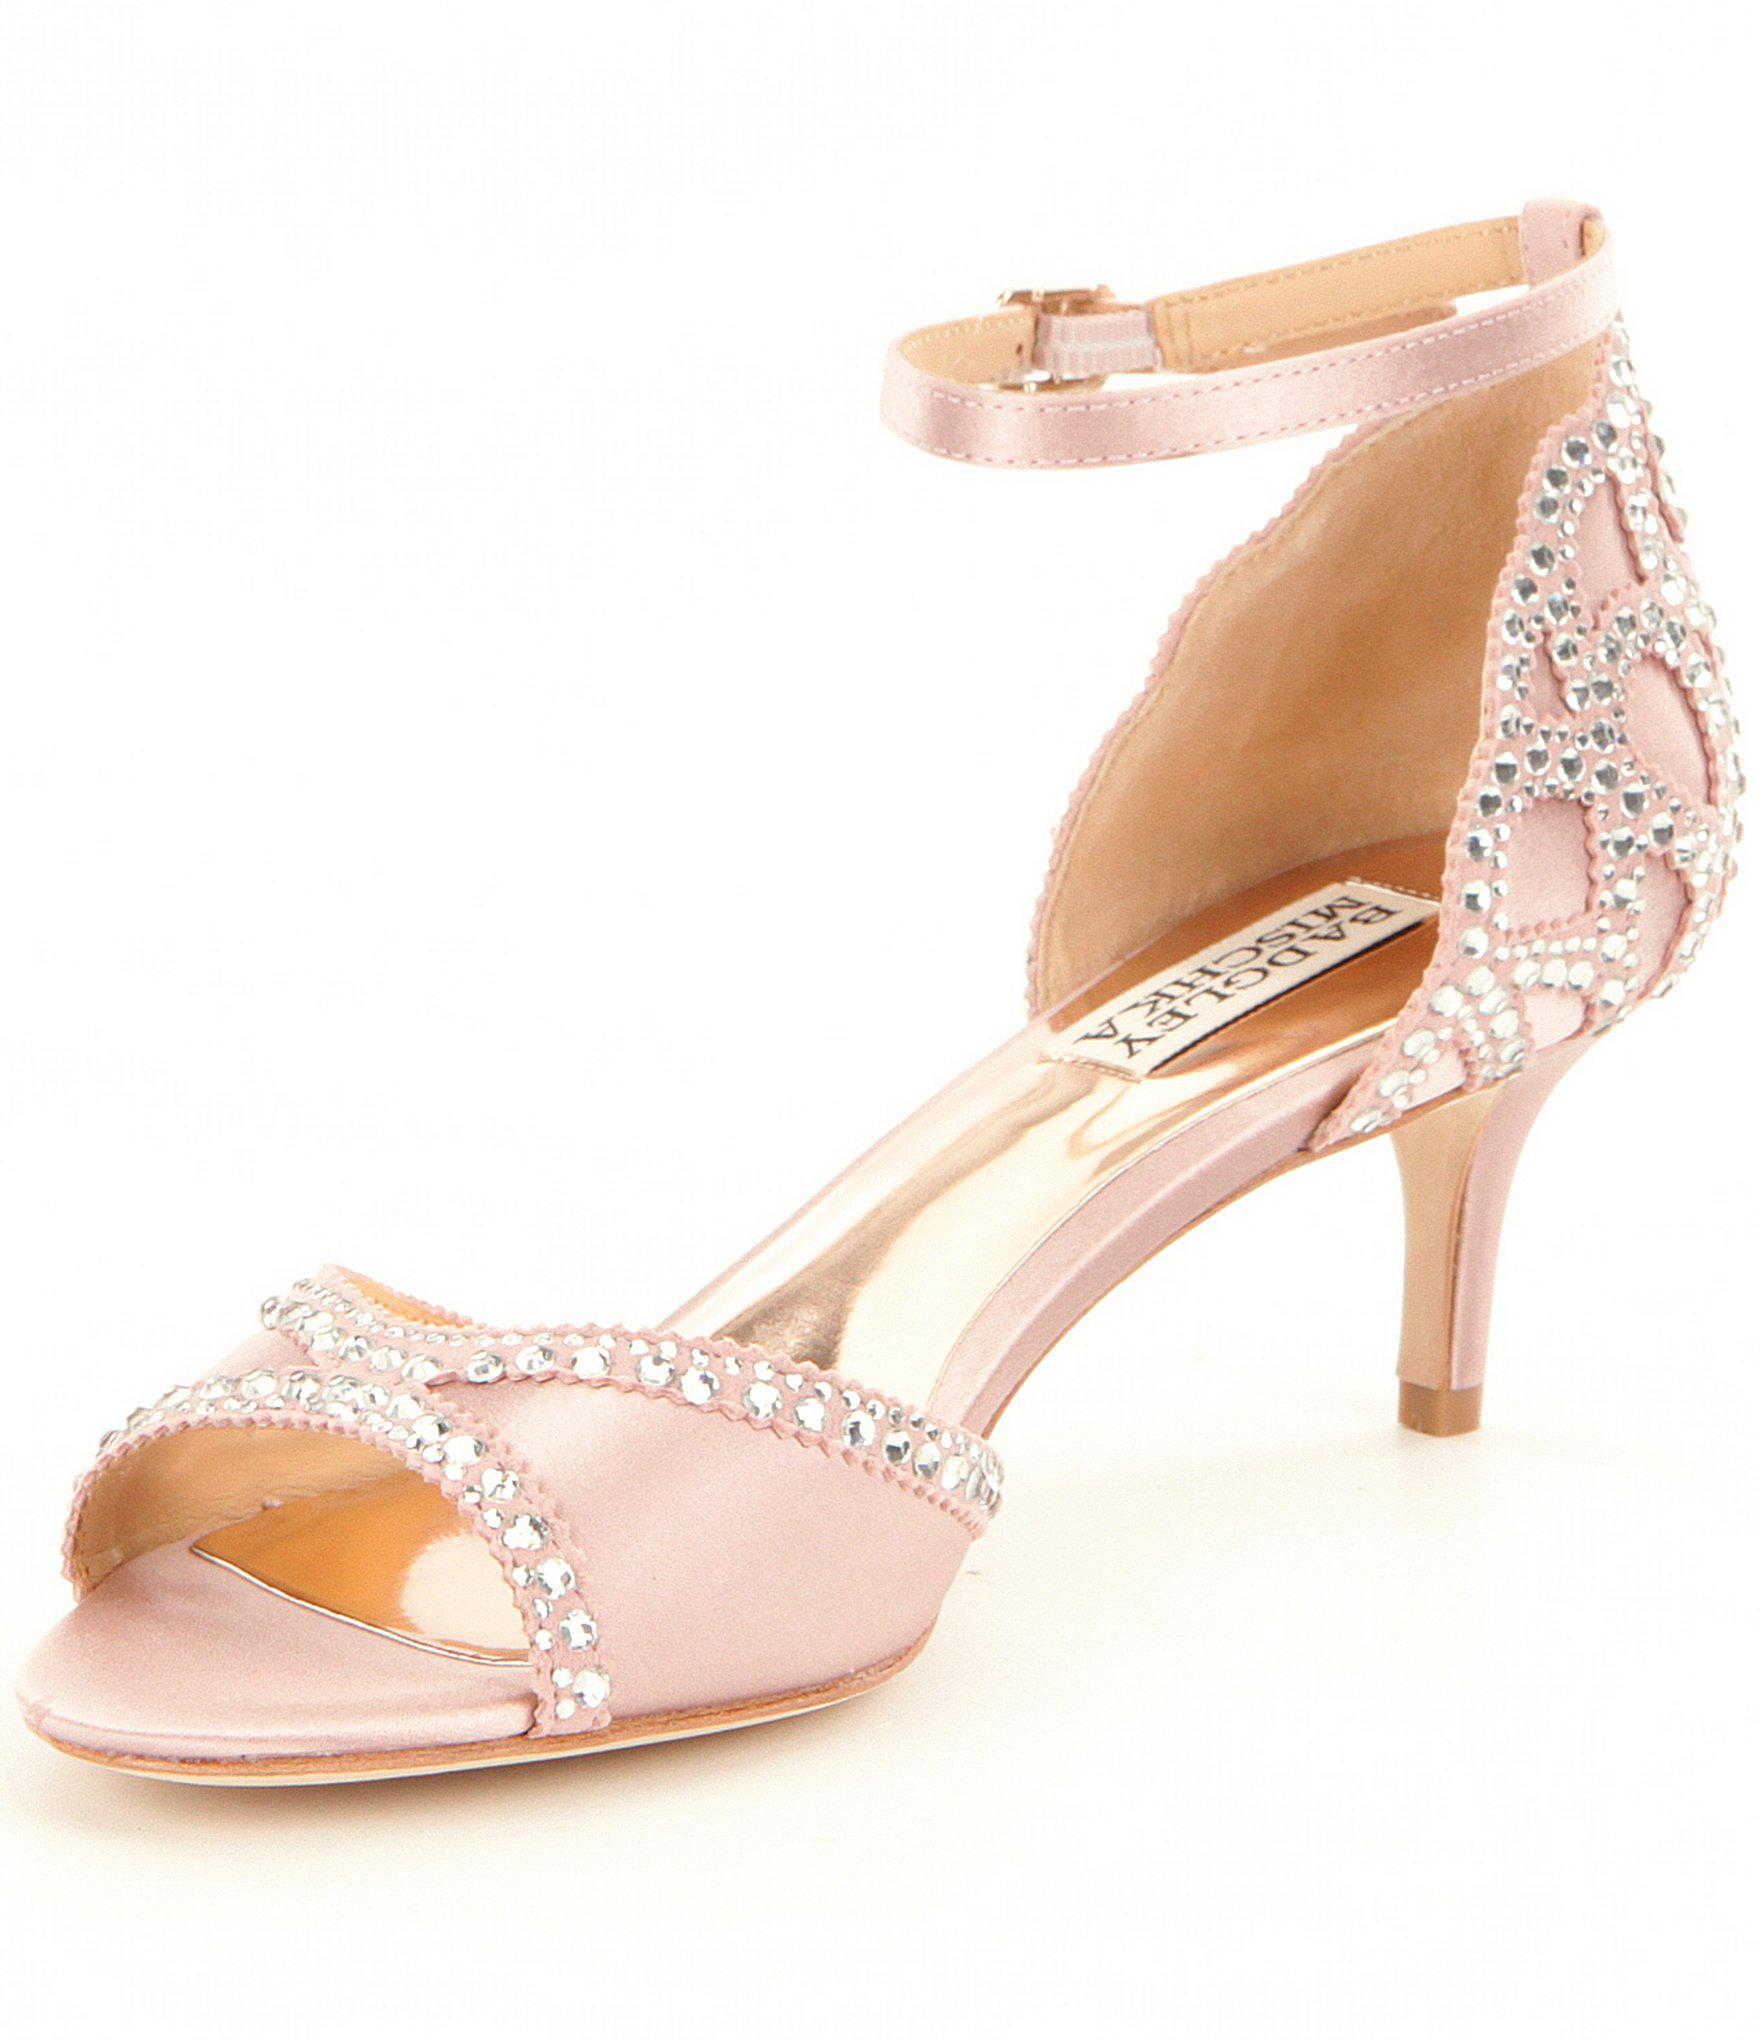 Badgley Mischka Gillian Jeweled Satin & Suede Dress Sandals in Pink - Lyst